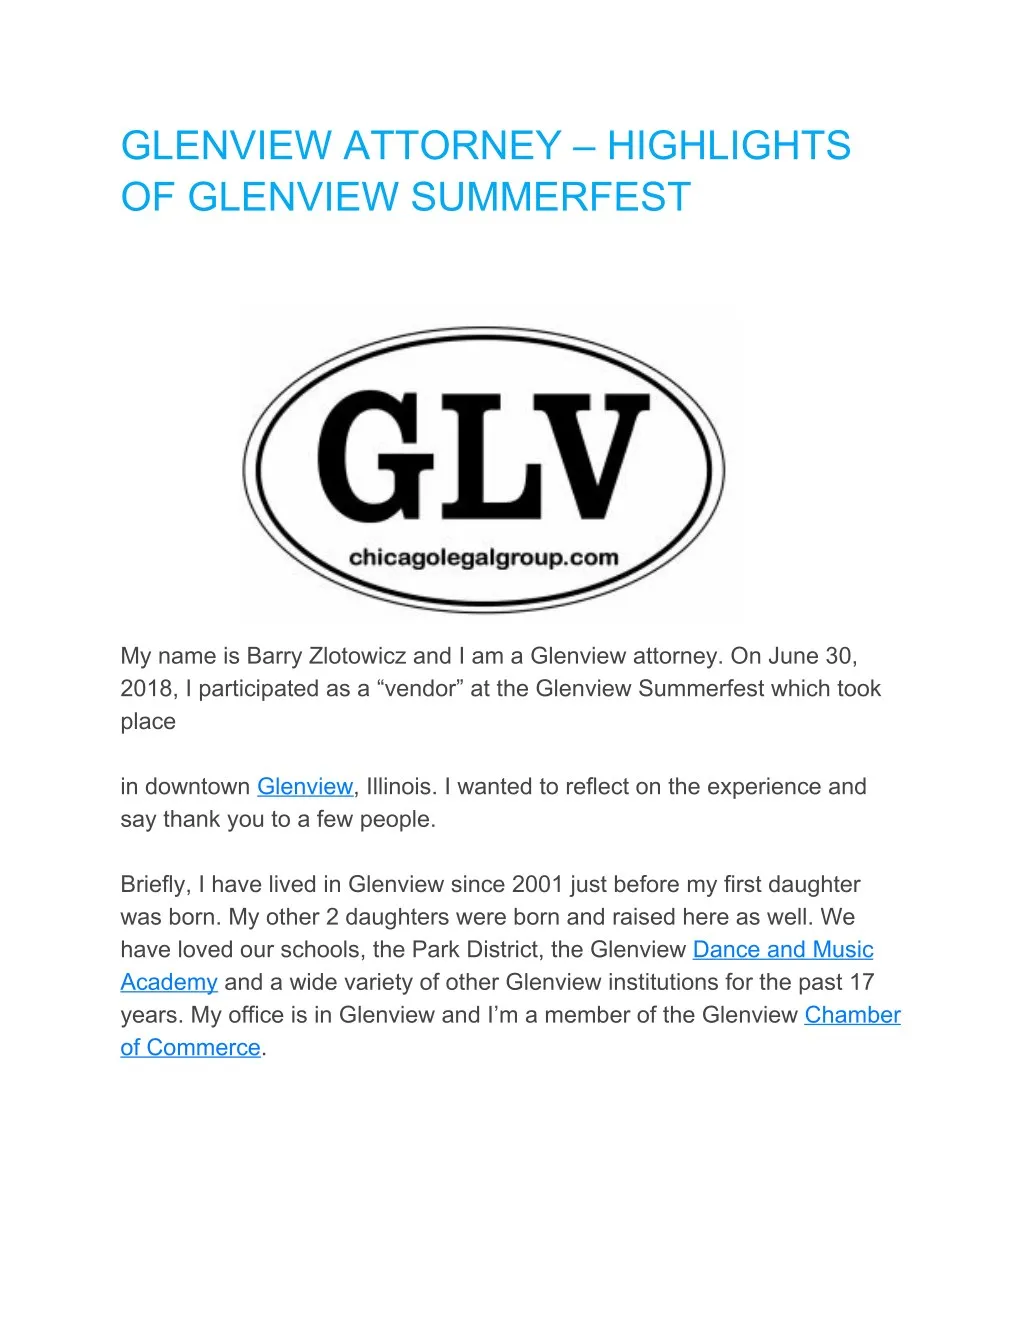 glenview attorney highlights of glenview